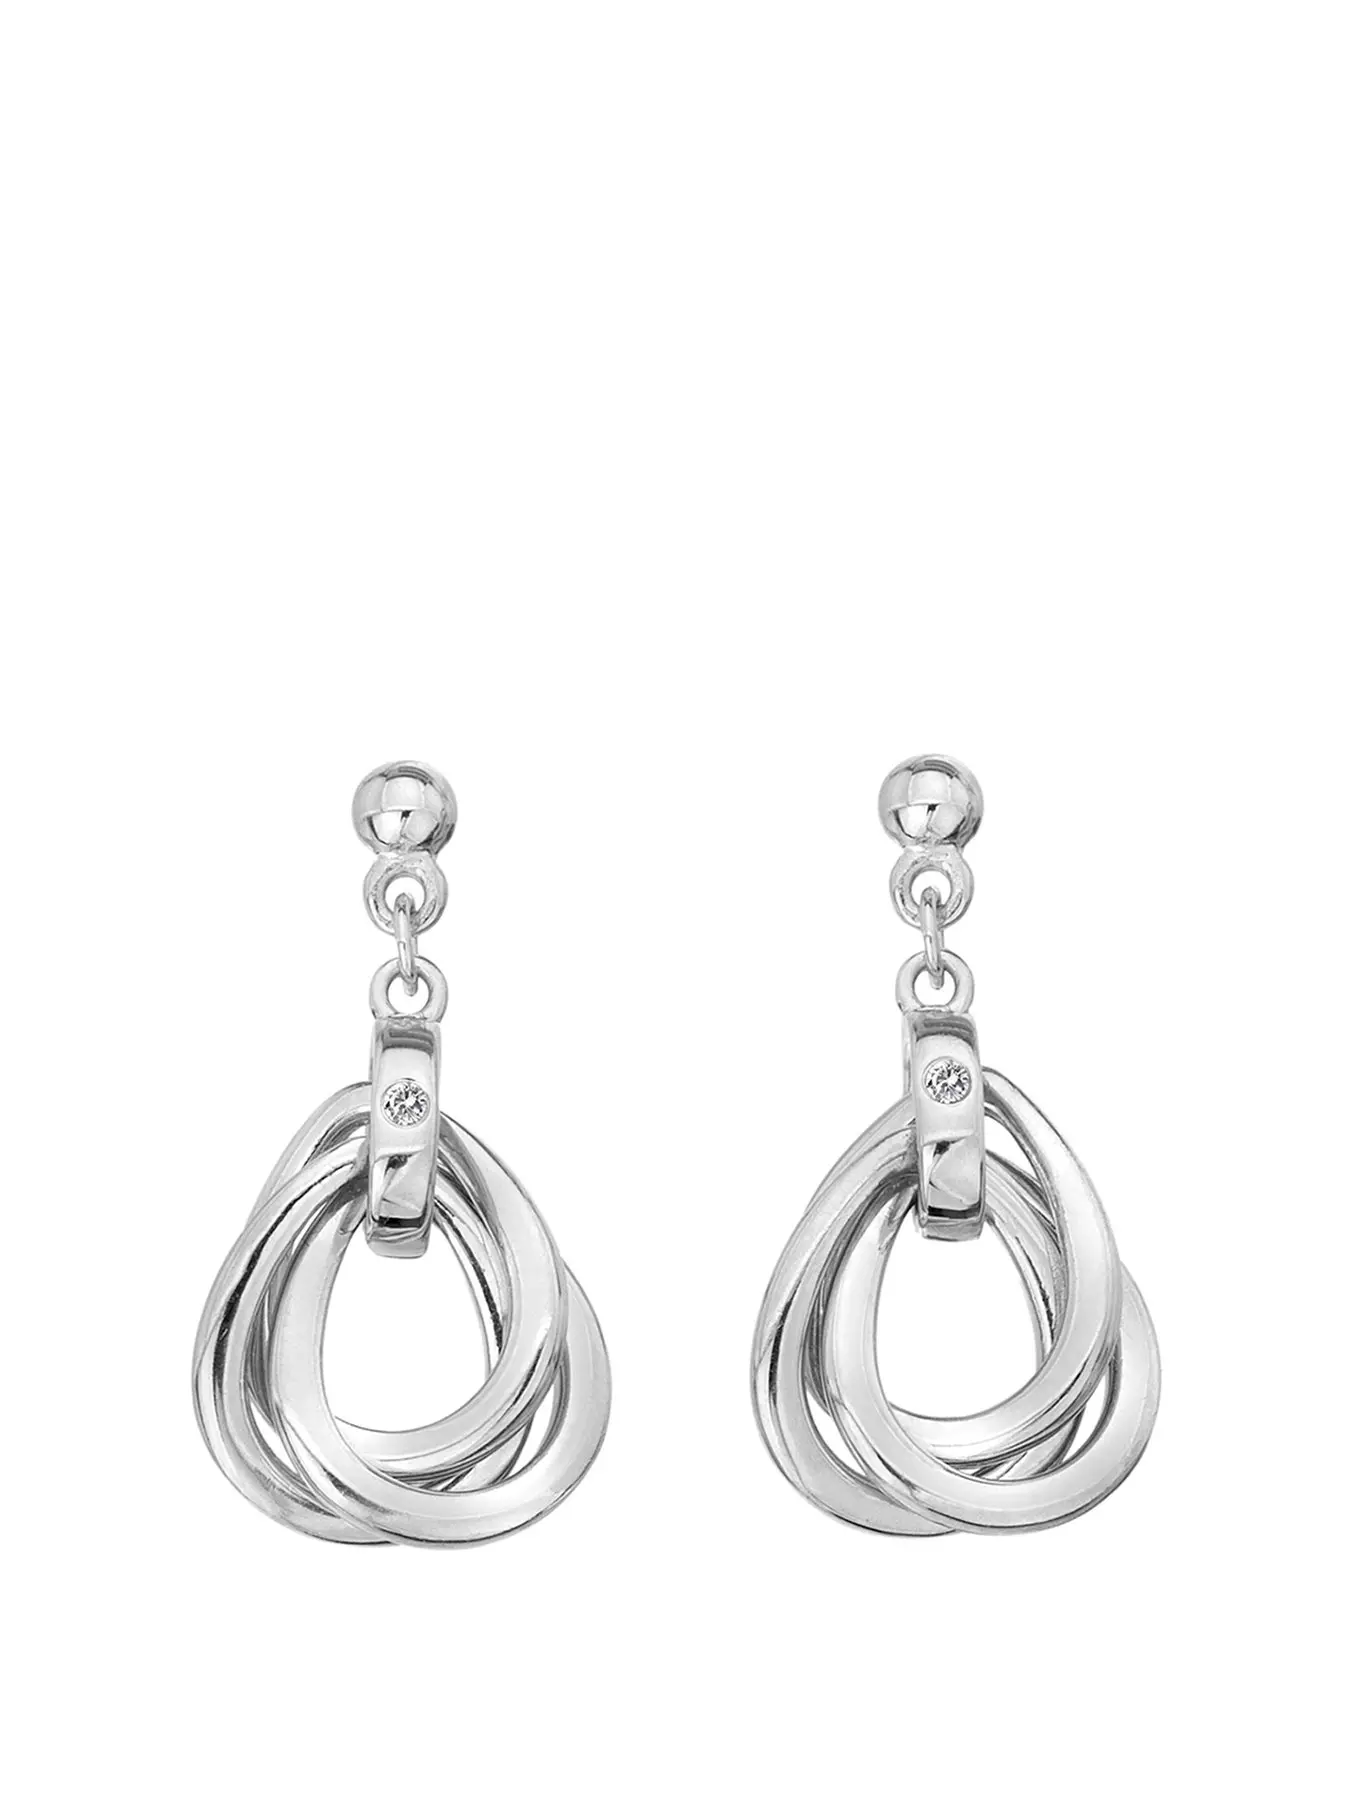 Sterling Silver, Earrings & piercings, Gifts & jewellery